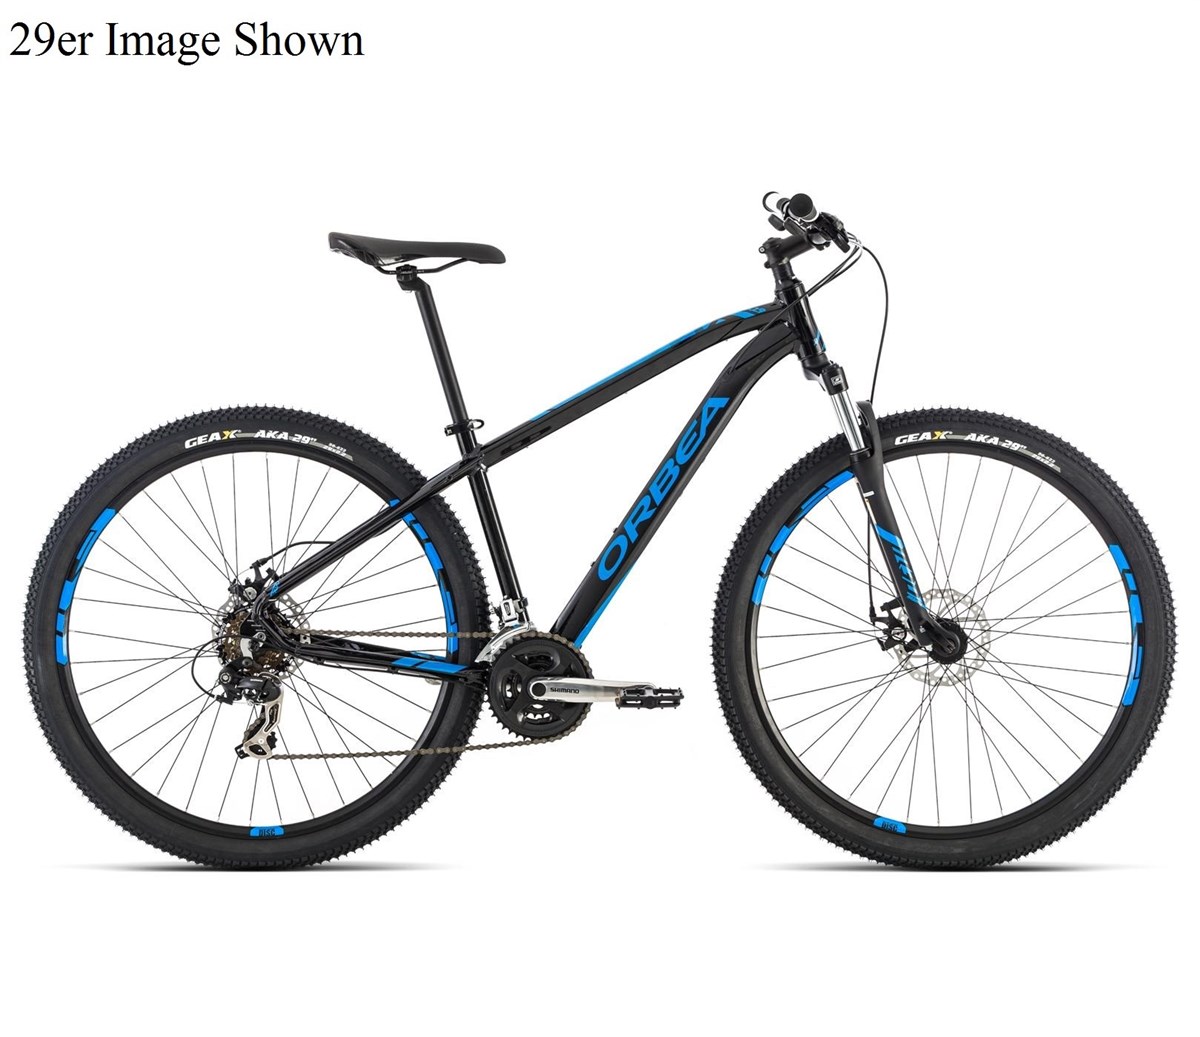 Orbea MX 27 50 Mountain Bike 2016 - Hardtail MTB product image